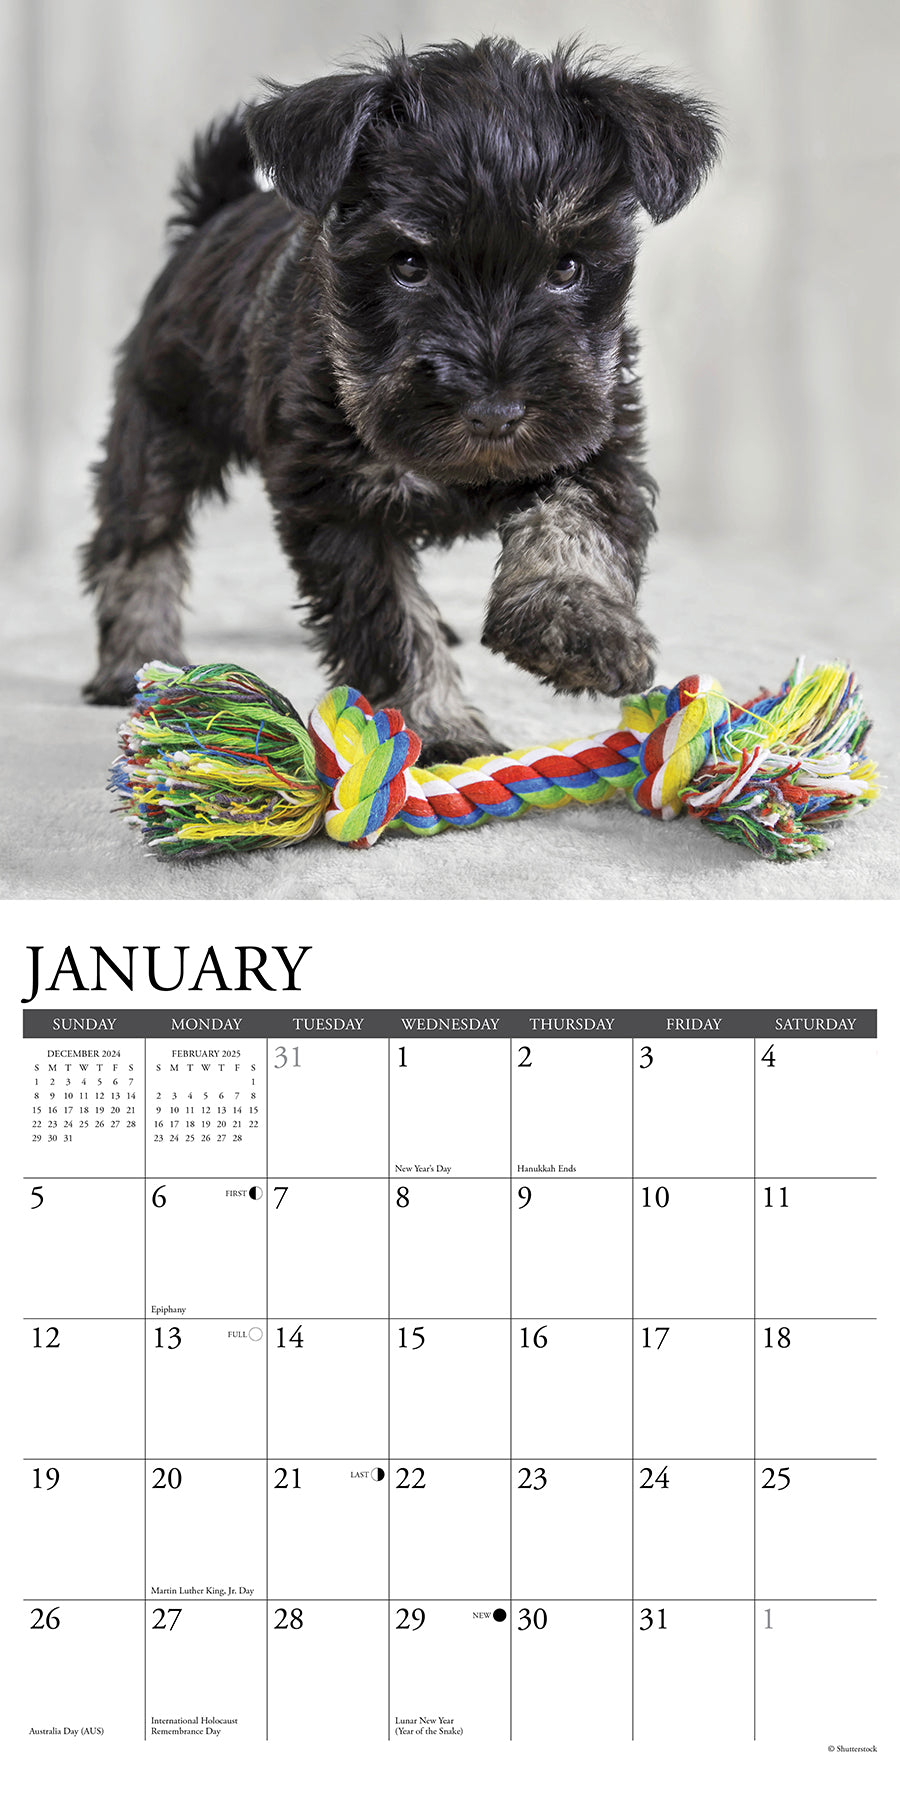 2025 Schnauzer Puppies - Square Wall Calendar